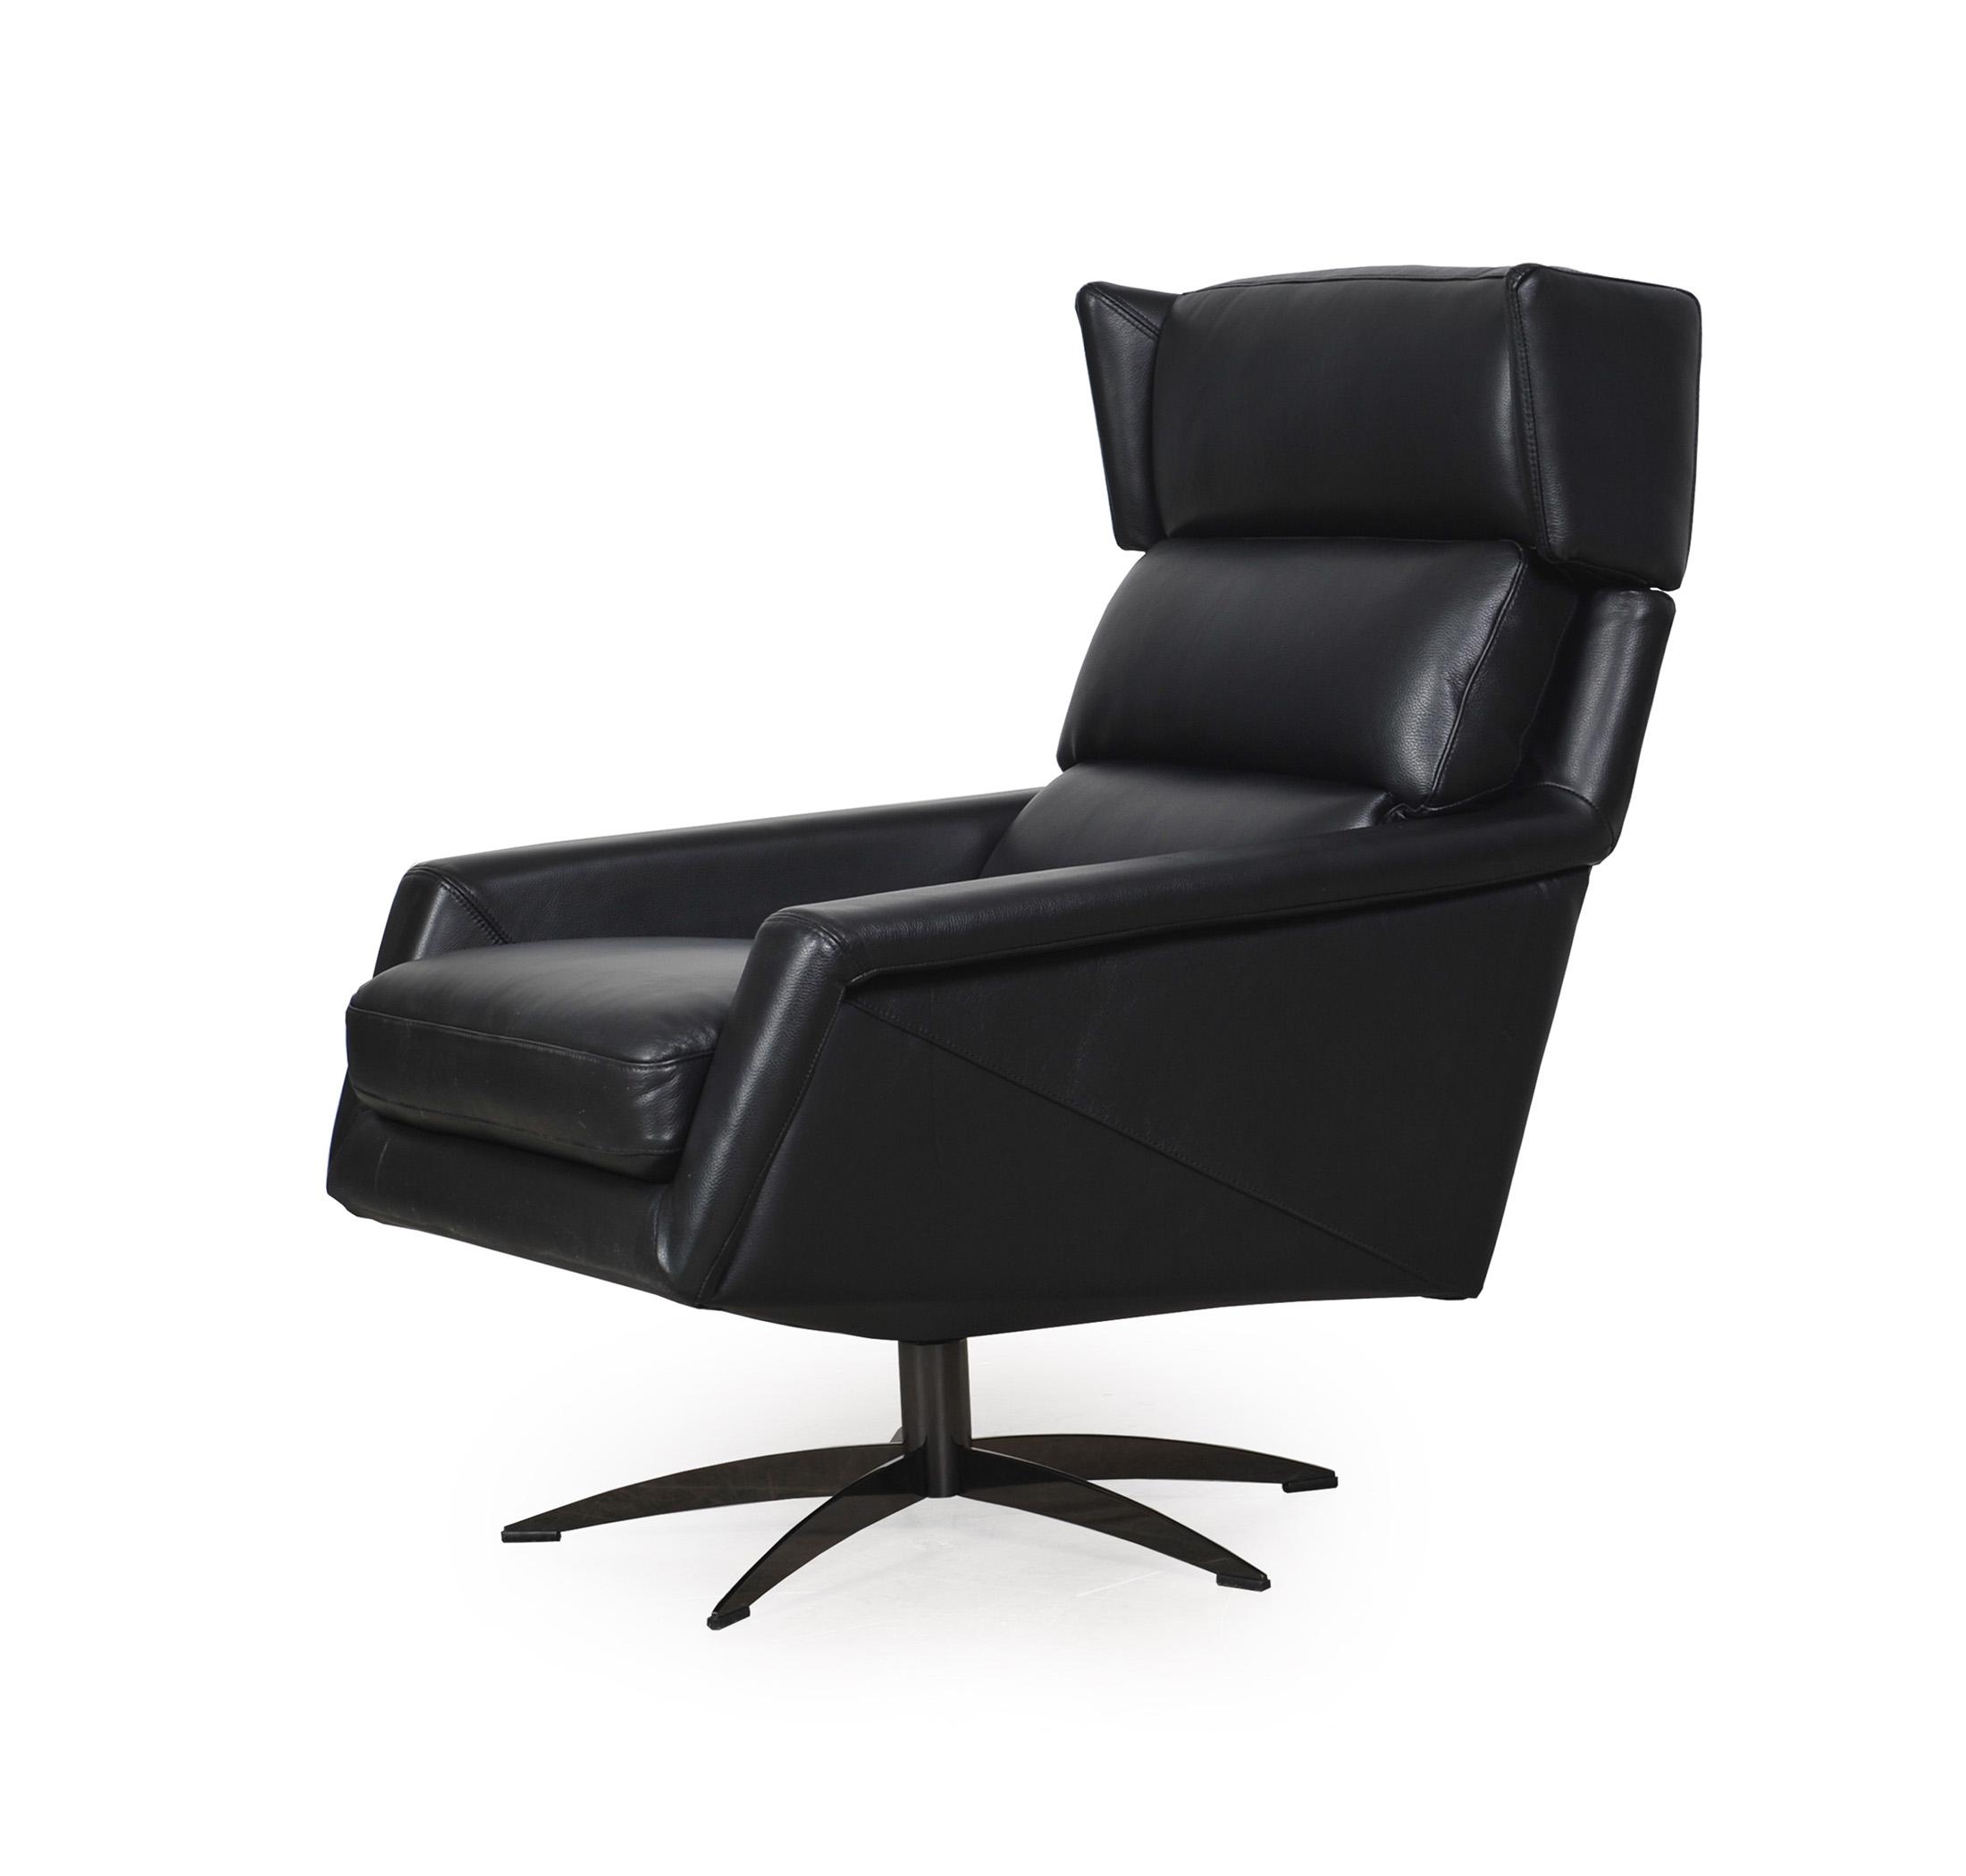 Contemporary, Modern Accent Chair 586 - Hansen 58606B1298 in Black Top grain leather